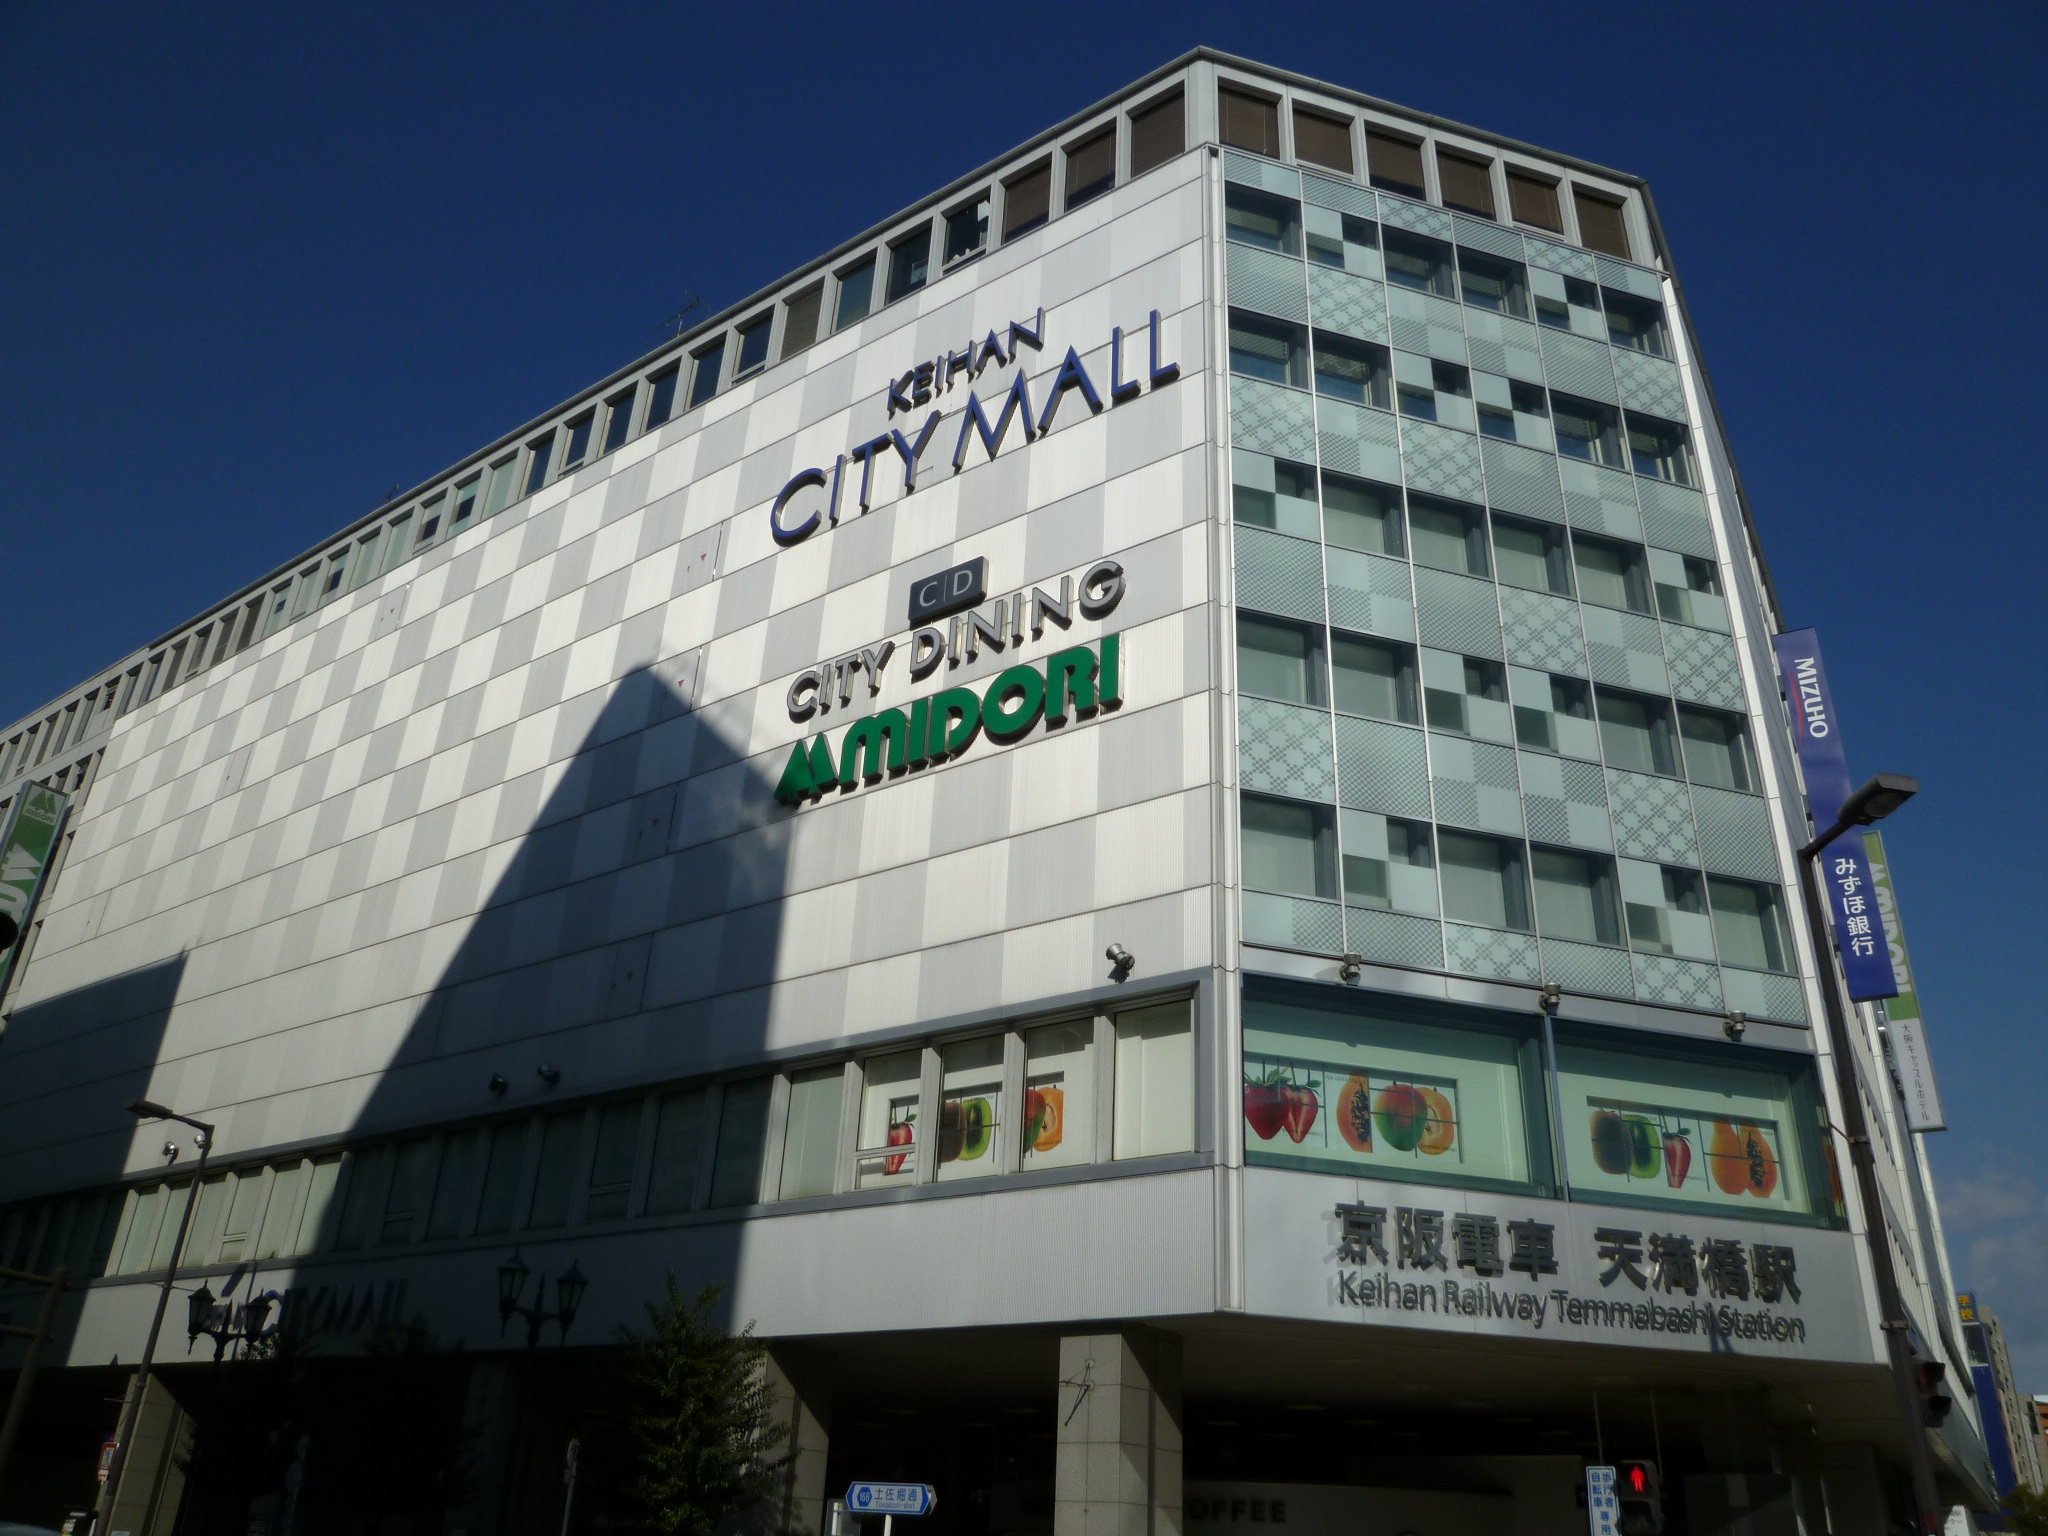 Shopping centre. 341m to Keihan City Mall (shopping center)